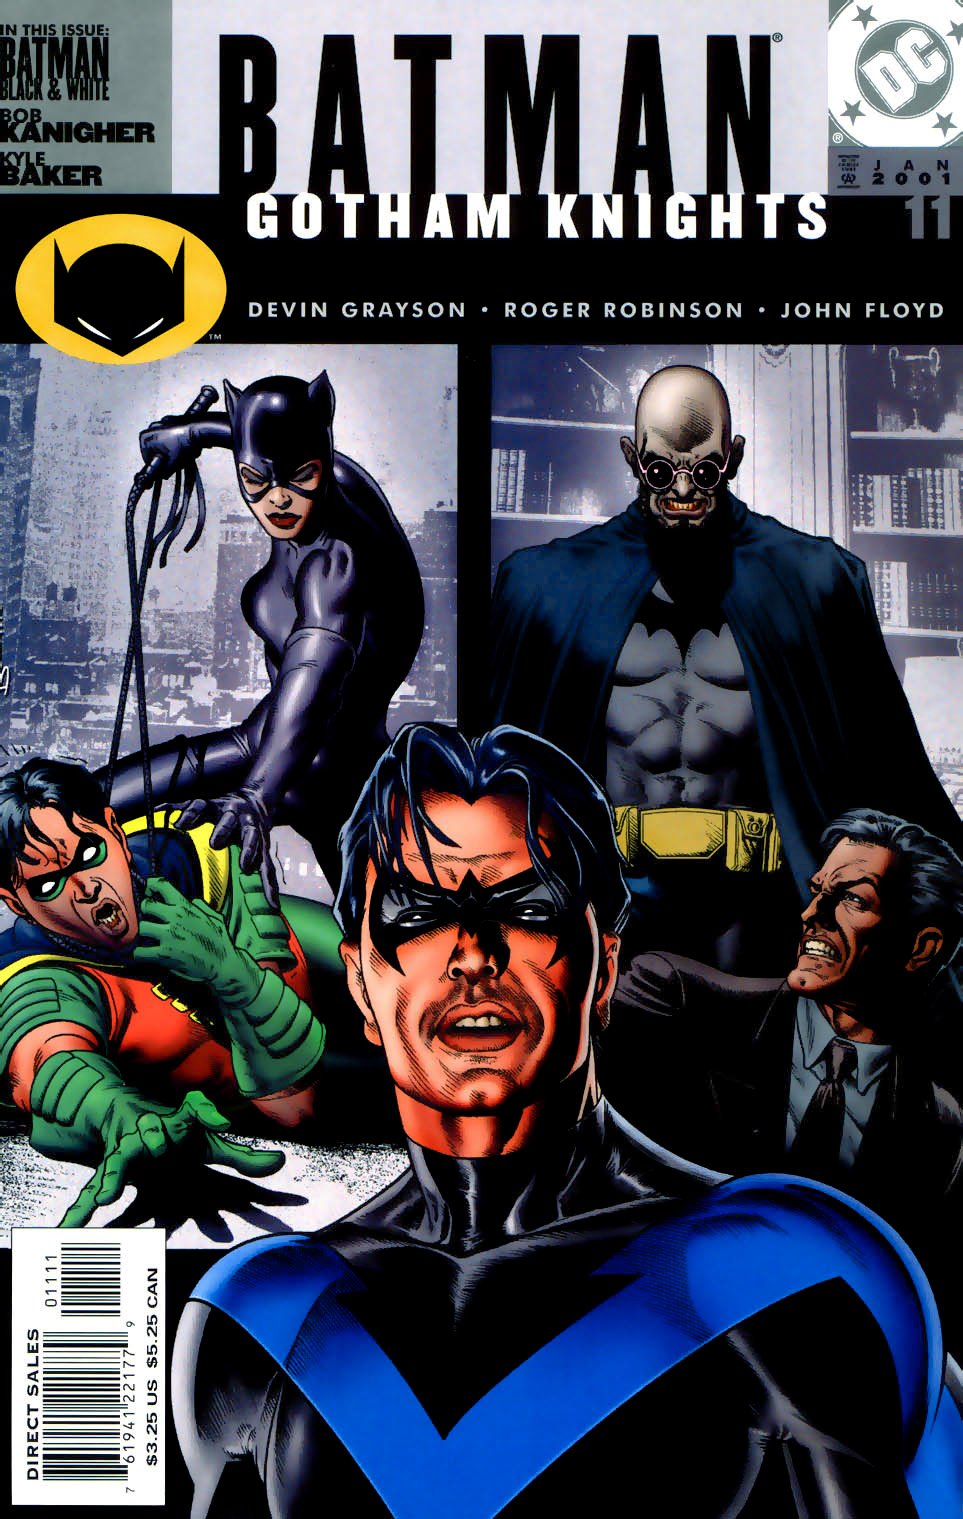 Batman: Gotham Knights Vol. 1 #11